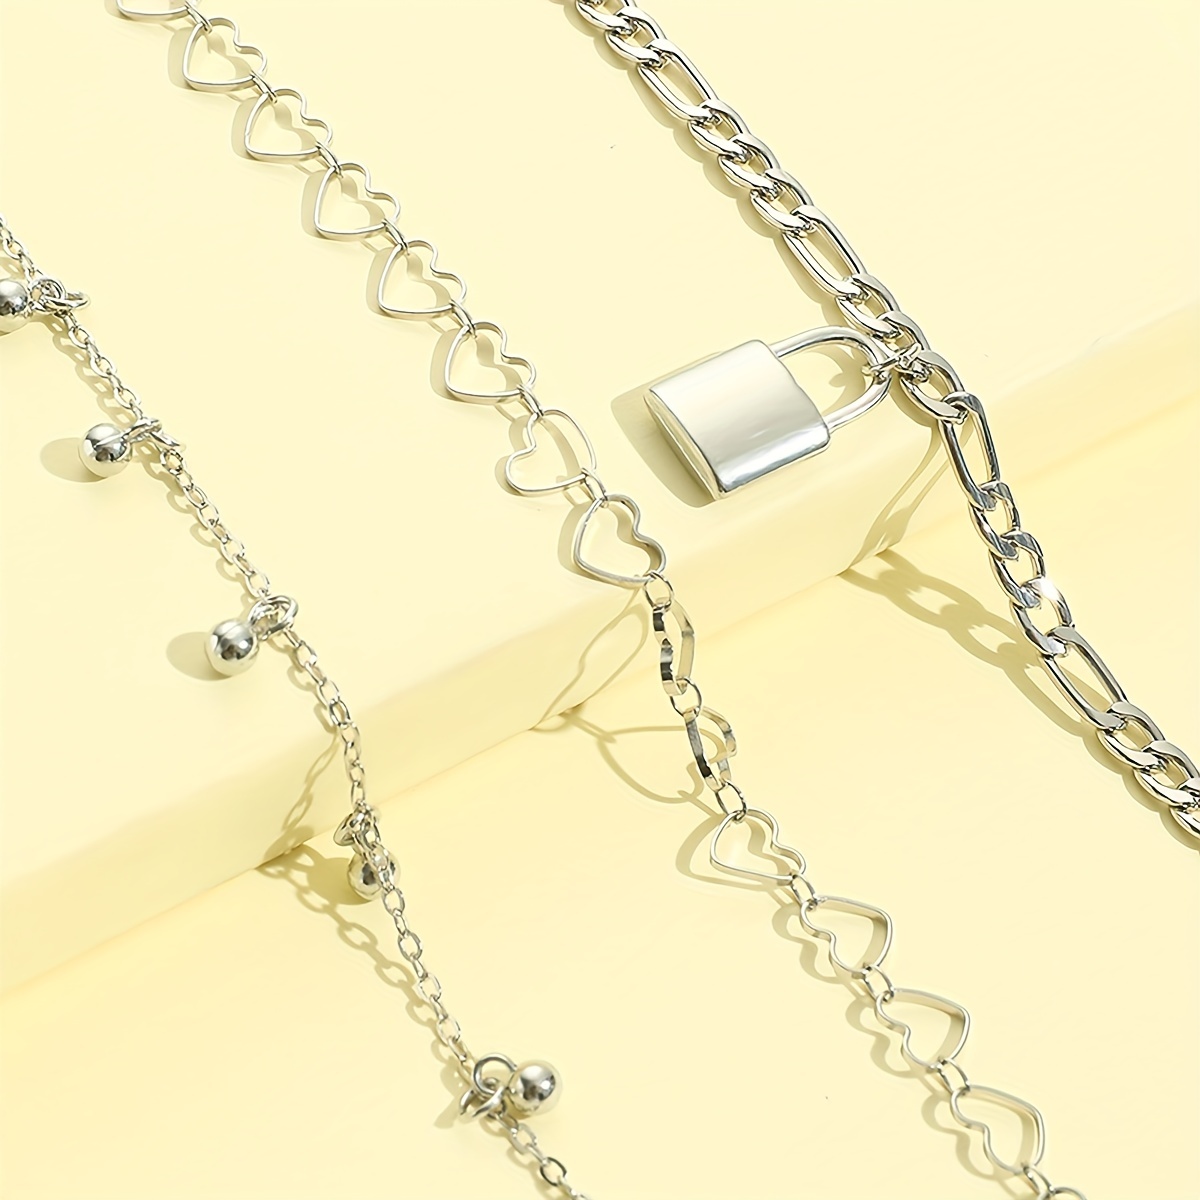 Vintage Lock Necklace for Men in Sterling Silver Dainty 